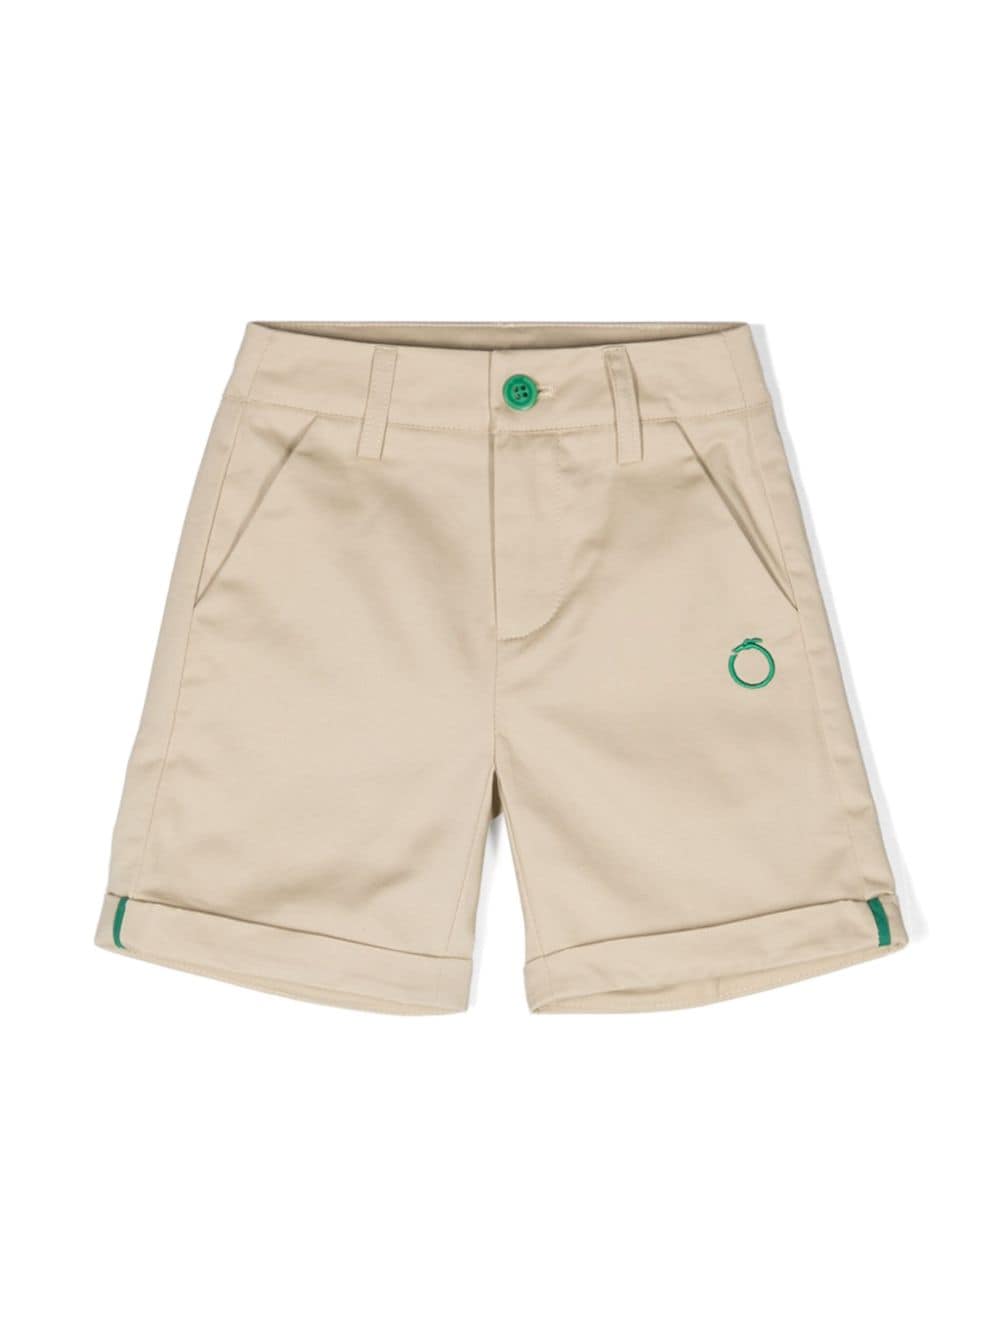 Beige Bermuda shorts for newborns with logo